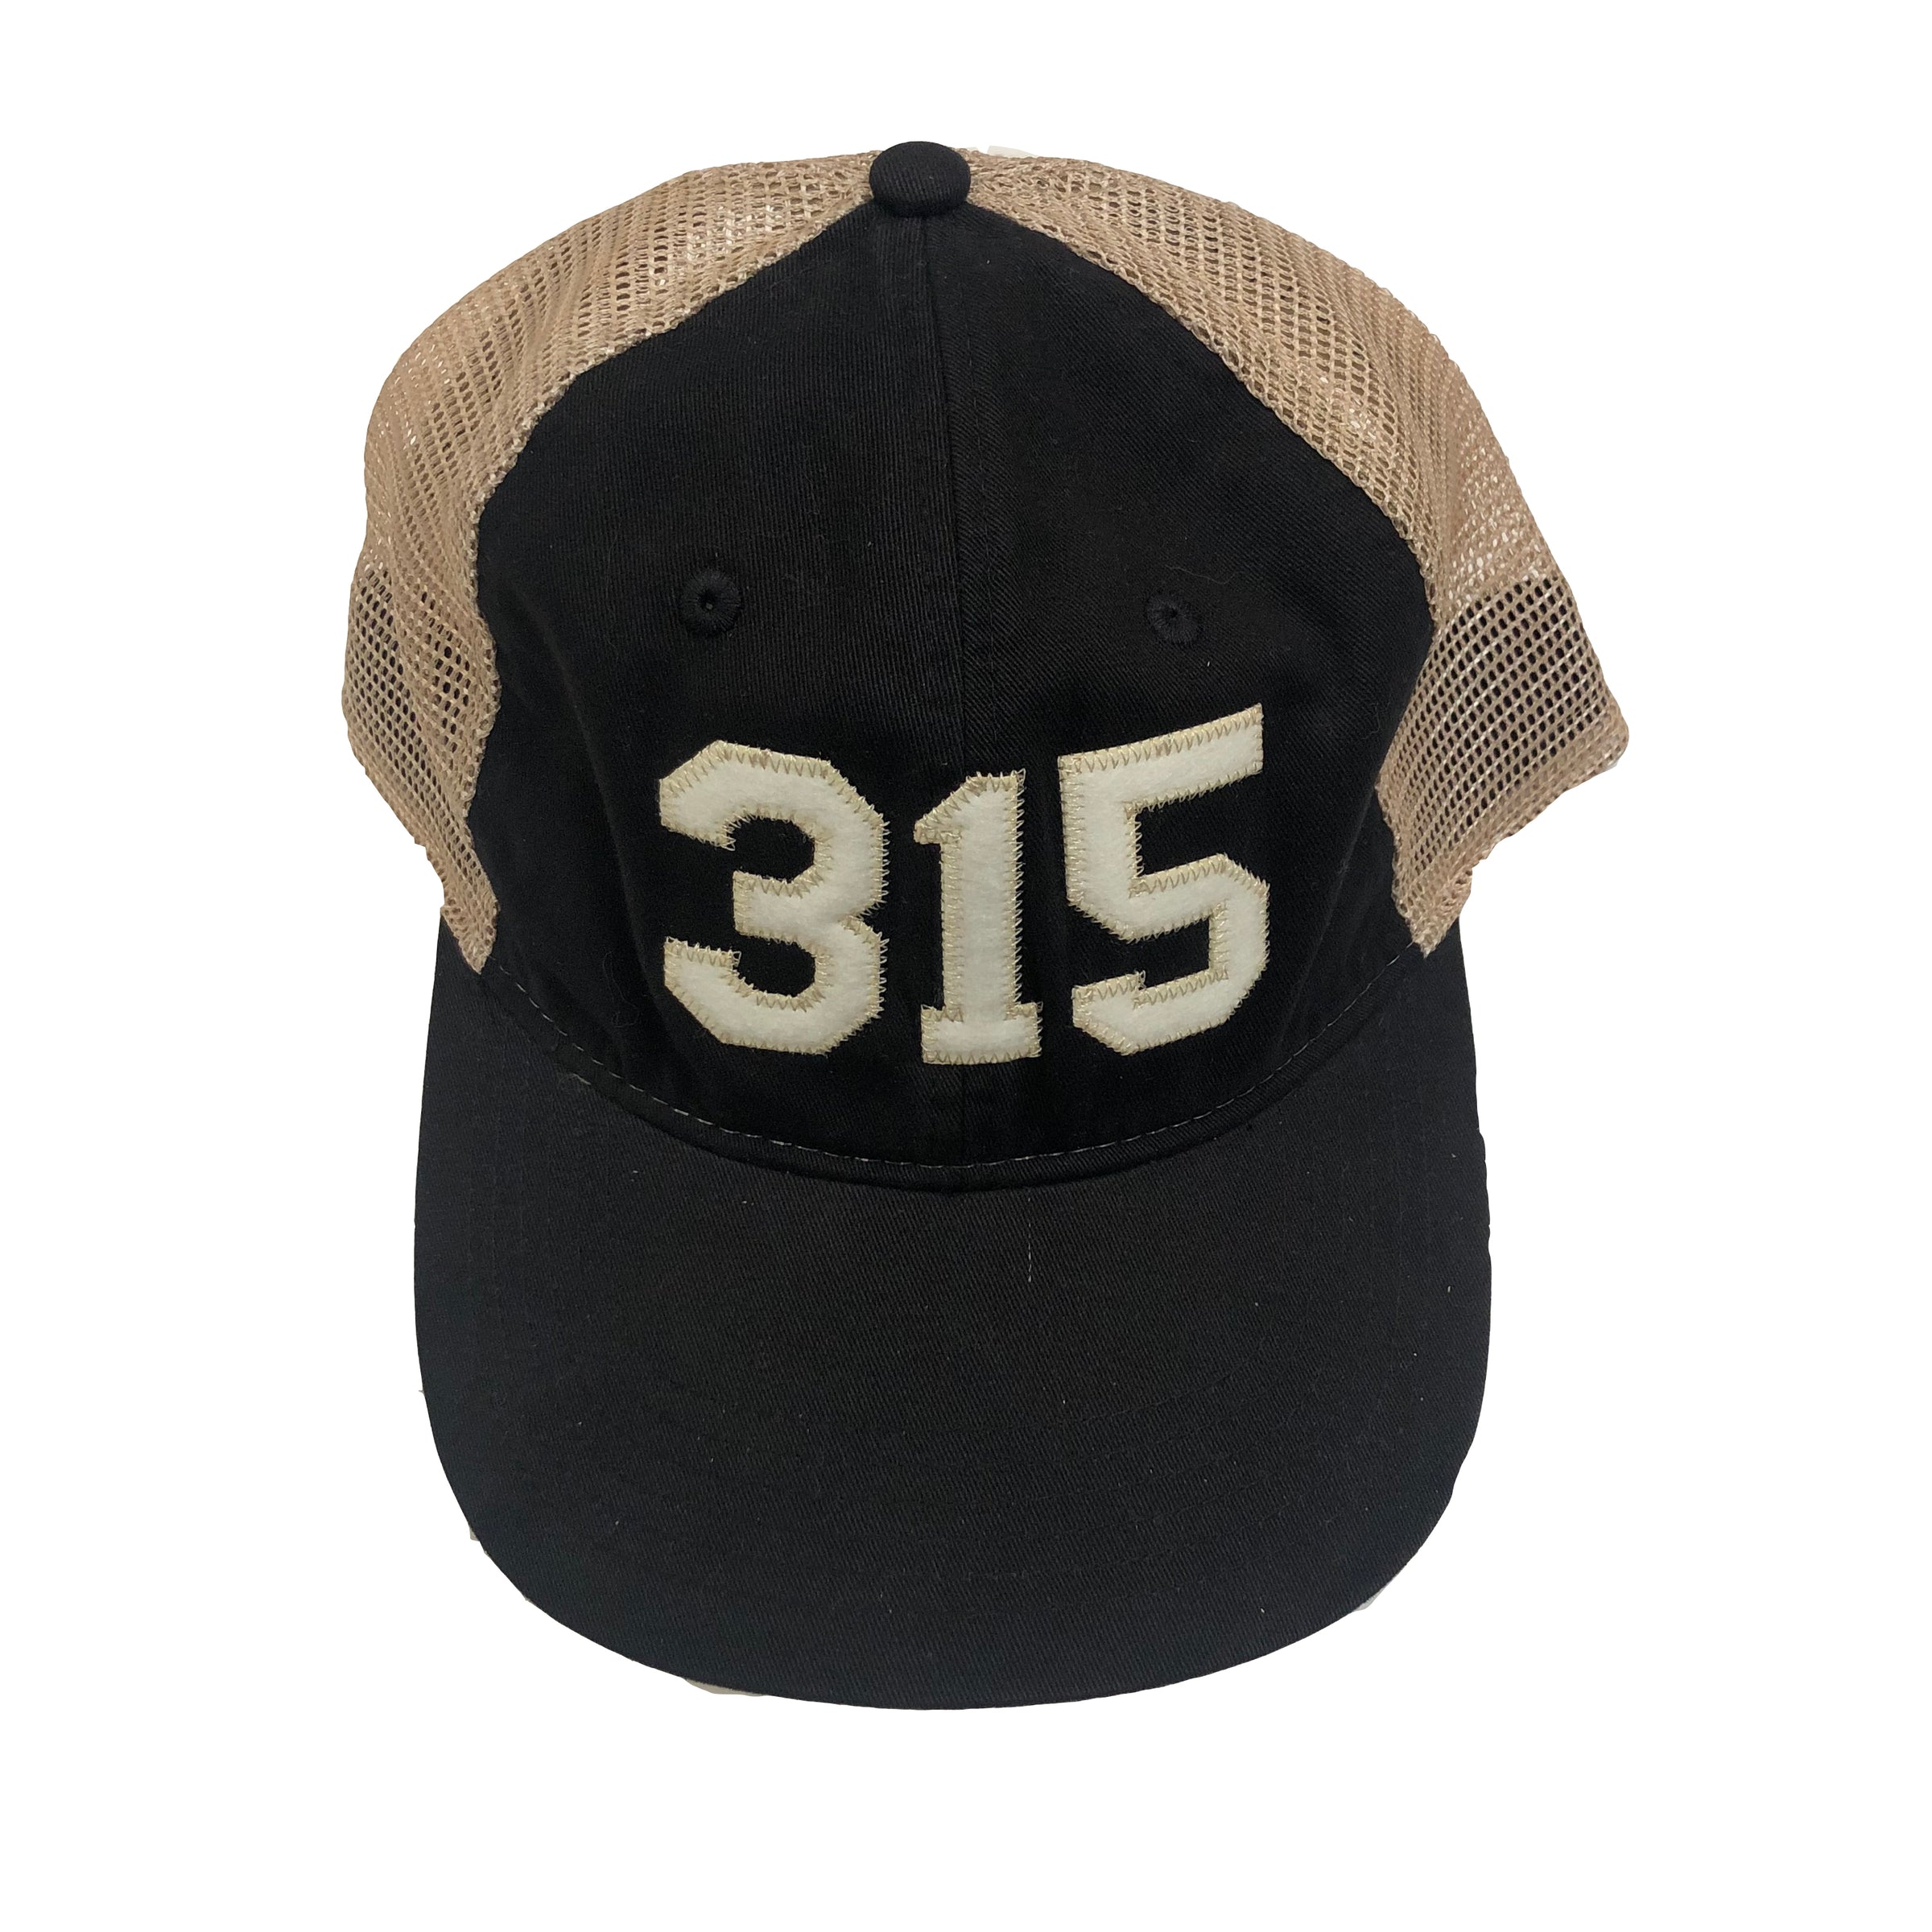 315 Baseball Hat